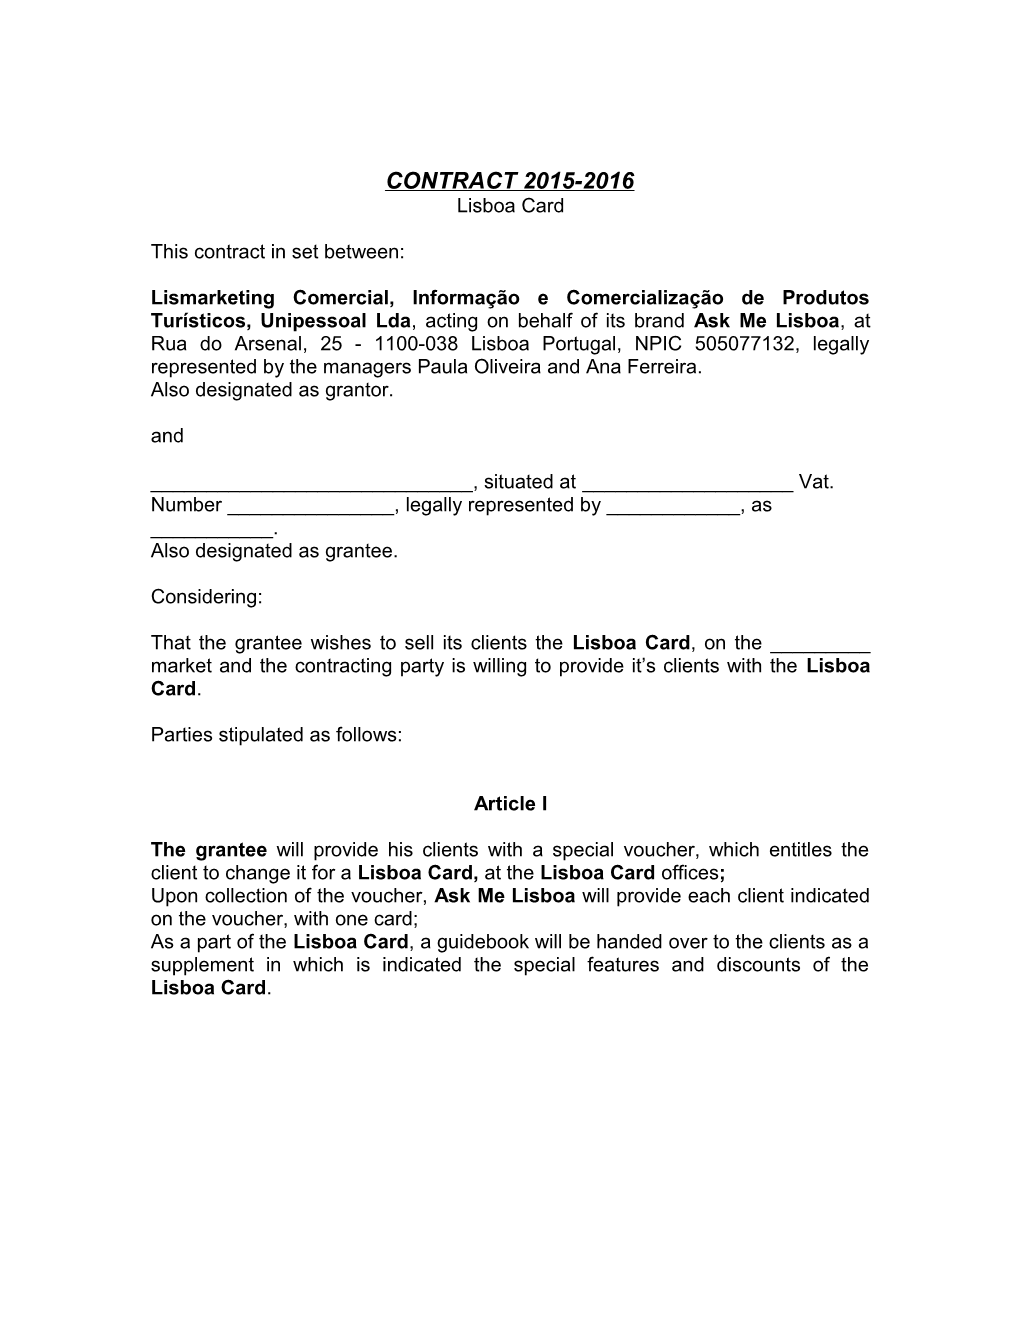 This Contract in Set Between